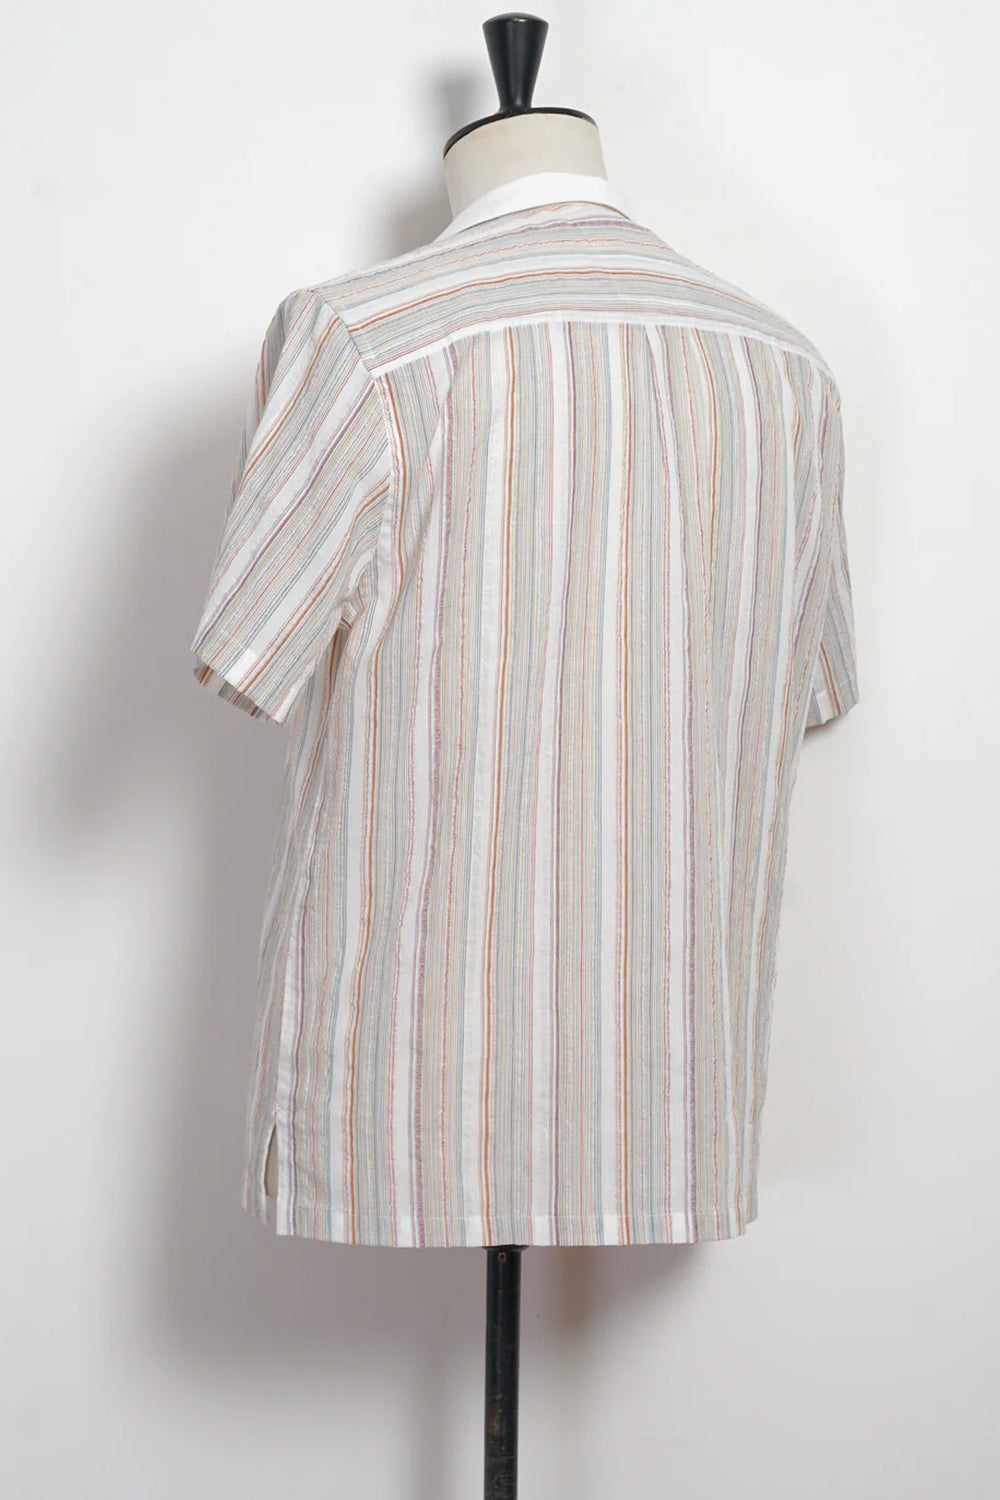 PHILIP Short Sleeve Pull-On Shirt